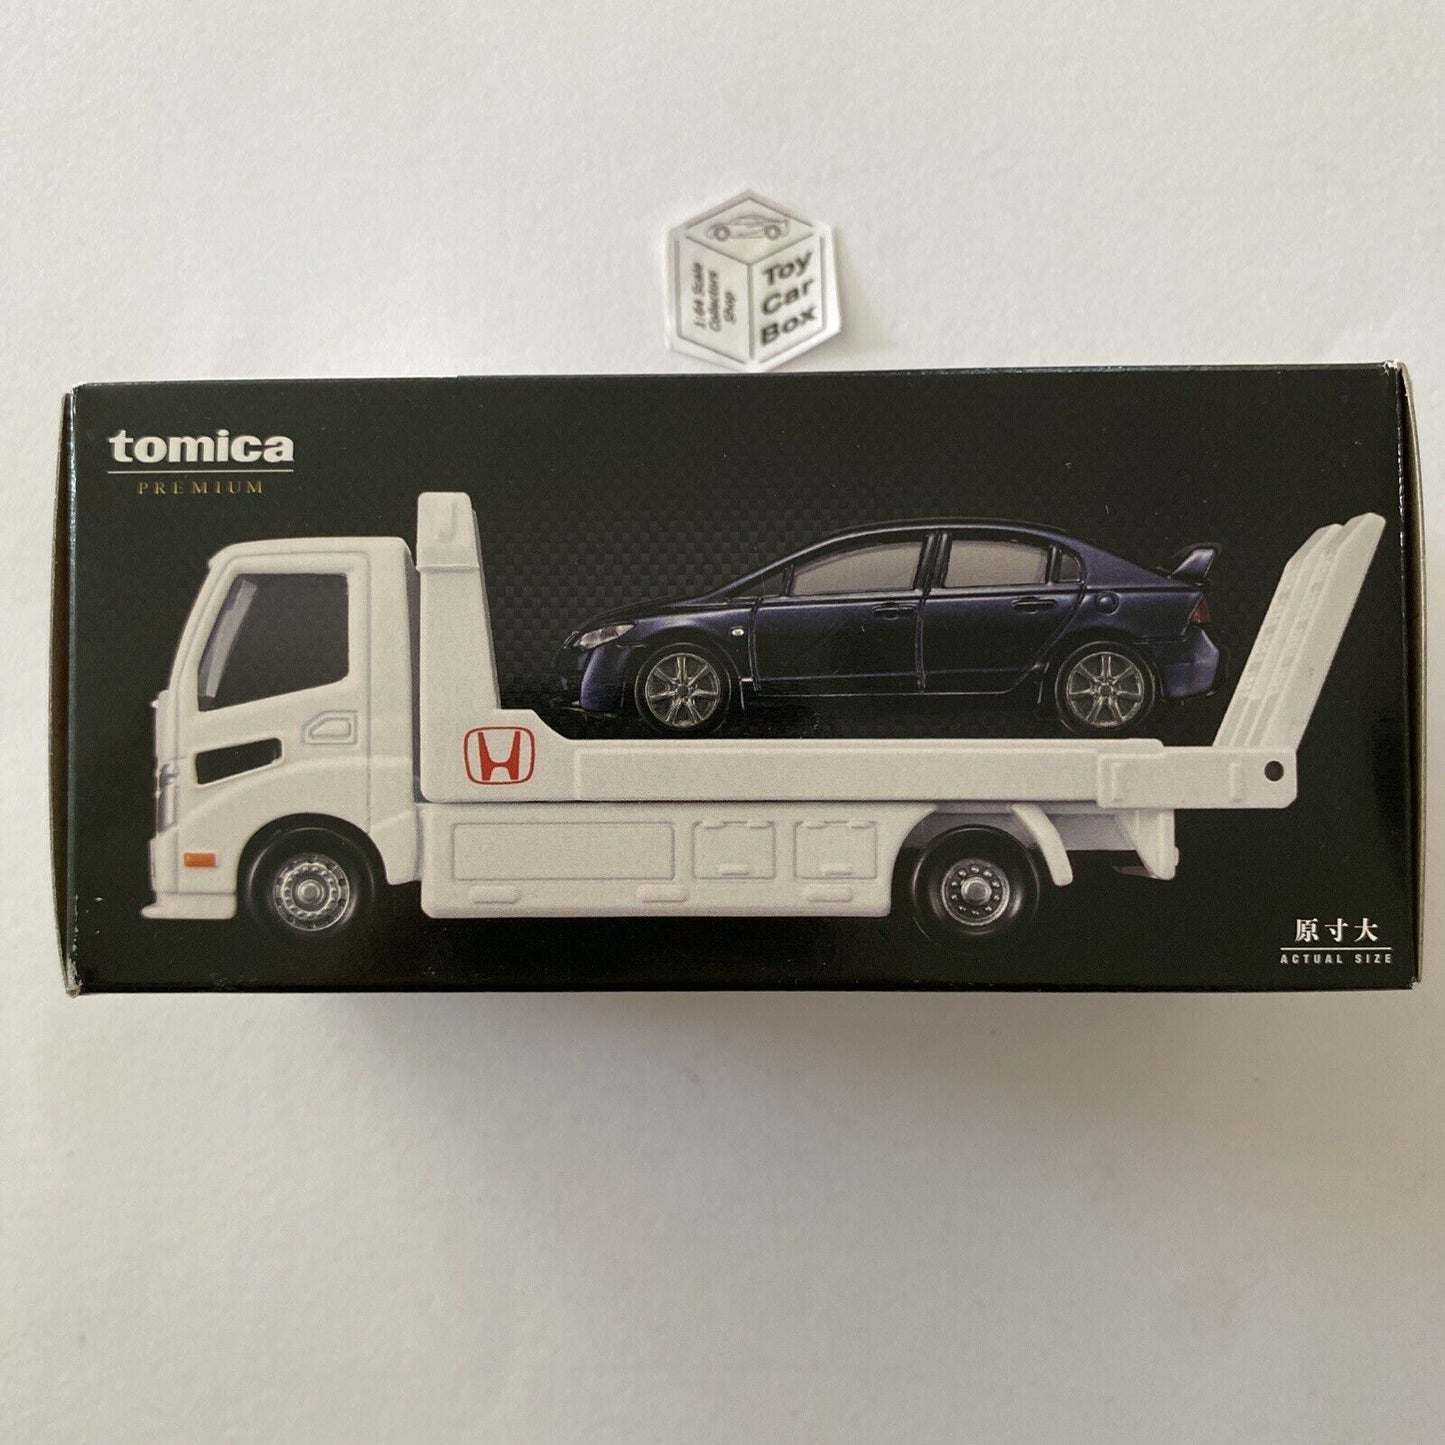 TOMICA Premium Transporter - Honda Civic FD2 Type R & Flatbed (Boxed) U13